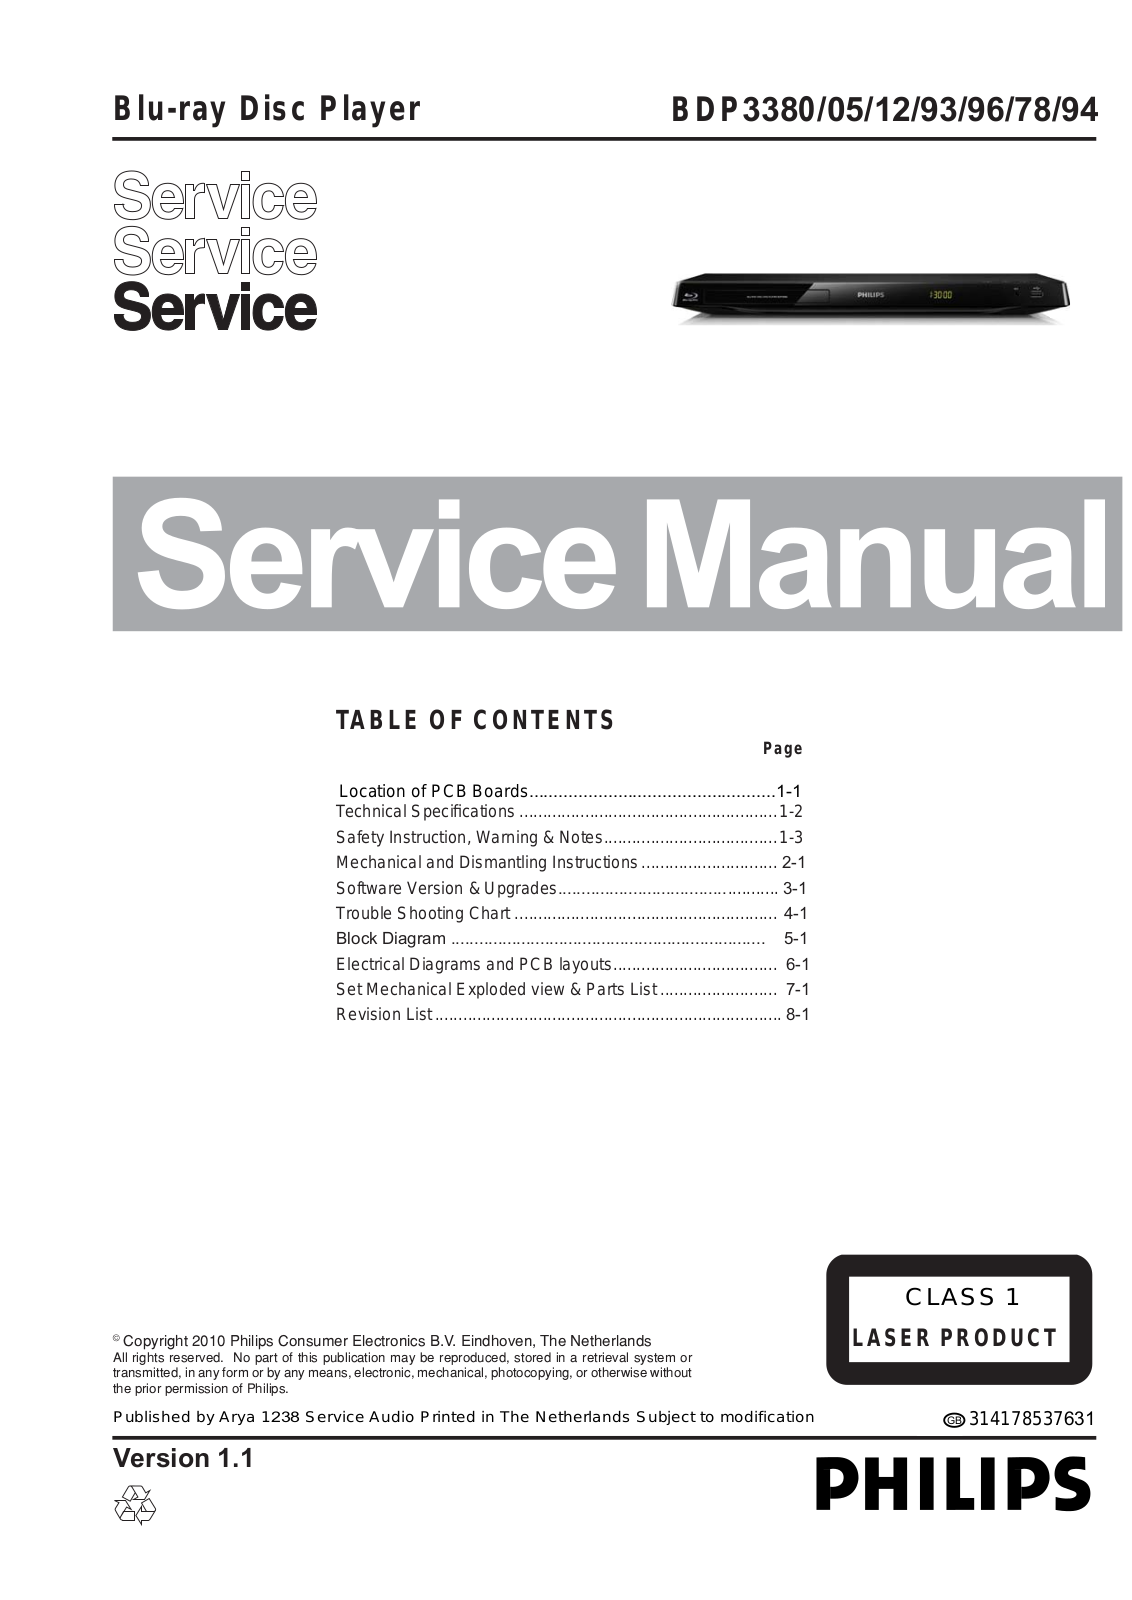 Philips BDP-3380 Service Manual